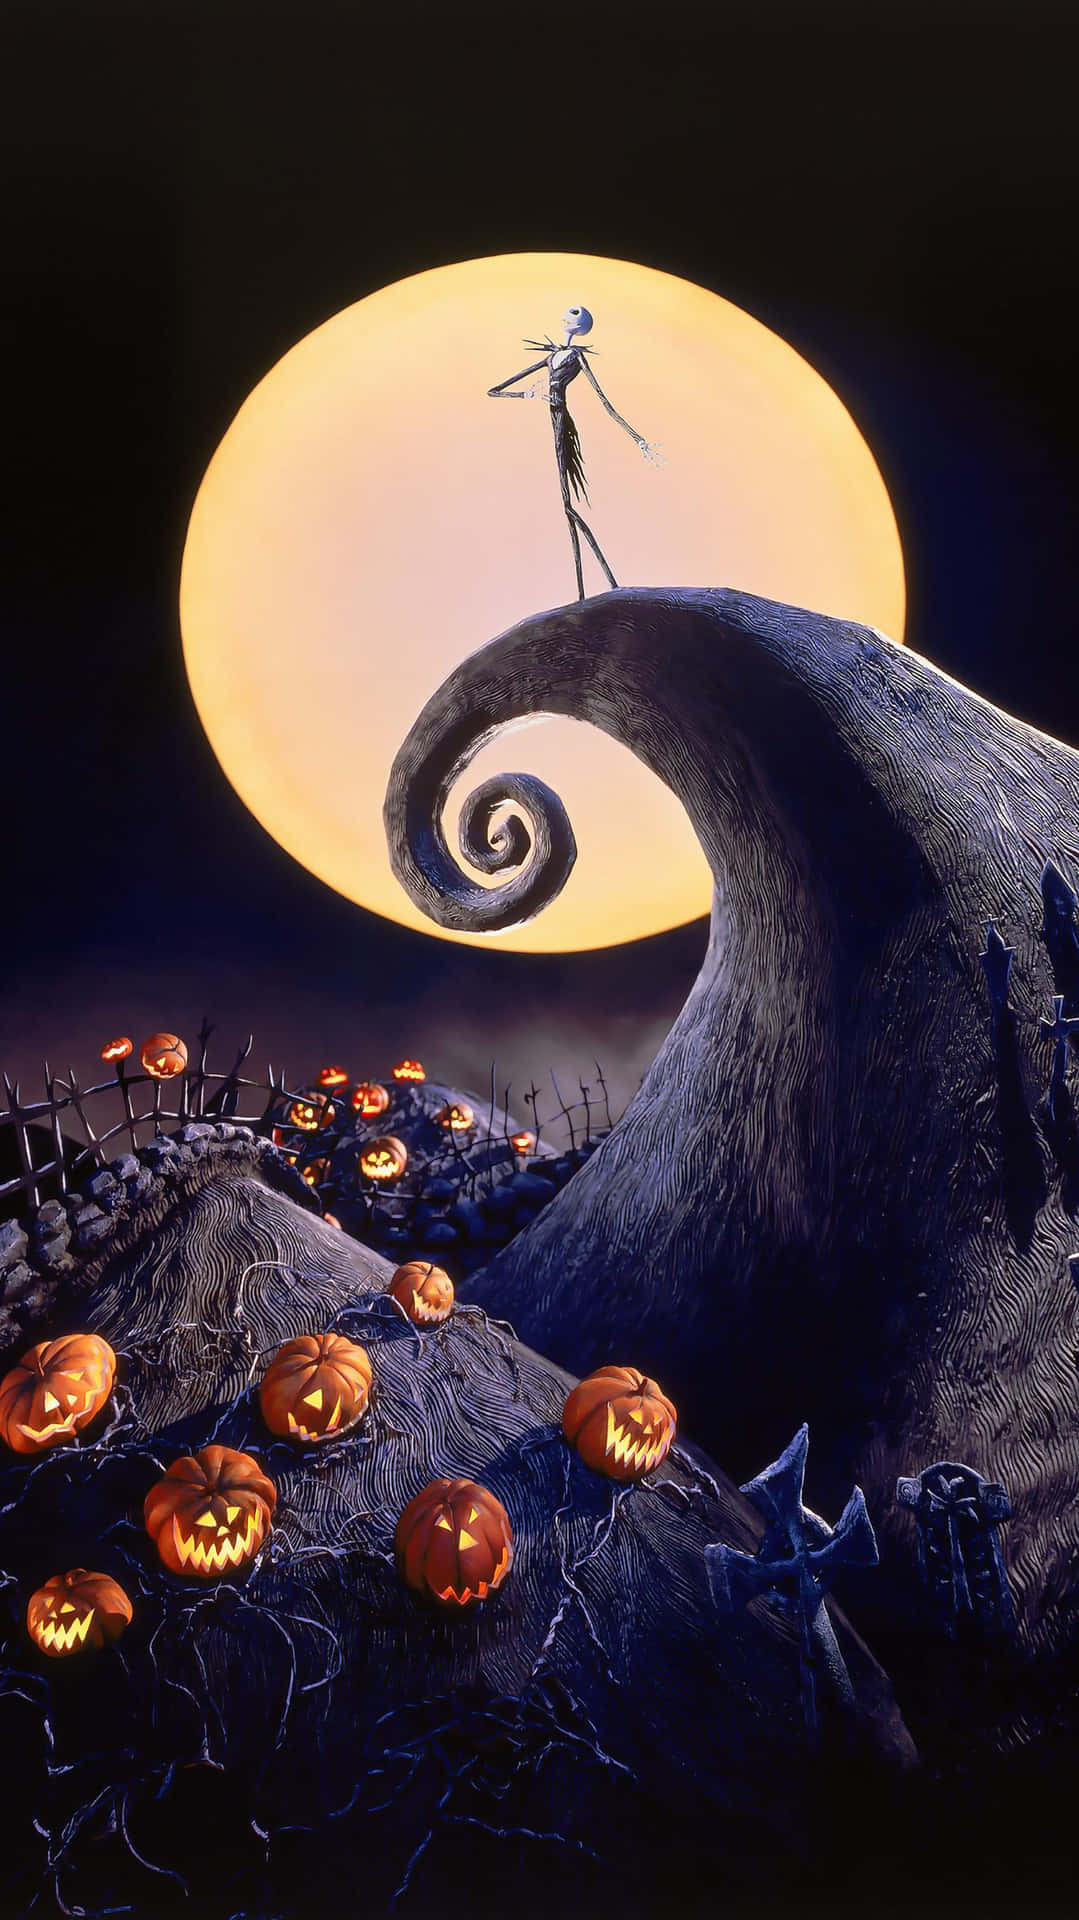 "Spooky Skeleton Spectacle in Tim Burton's Nightmare Before Christmas"